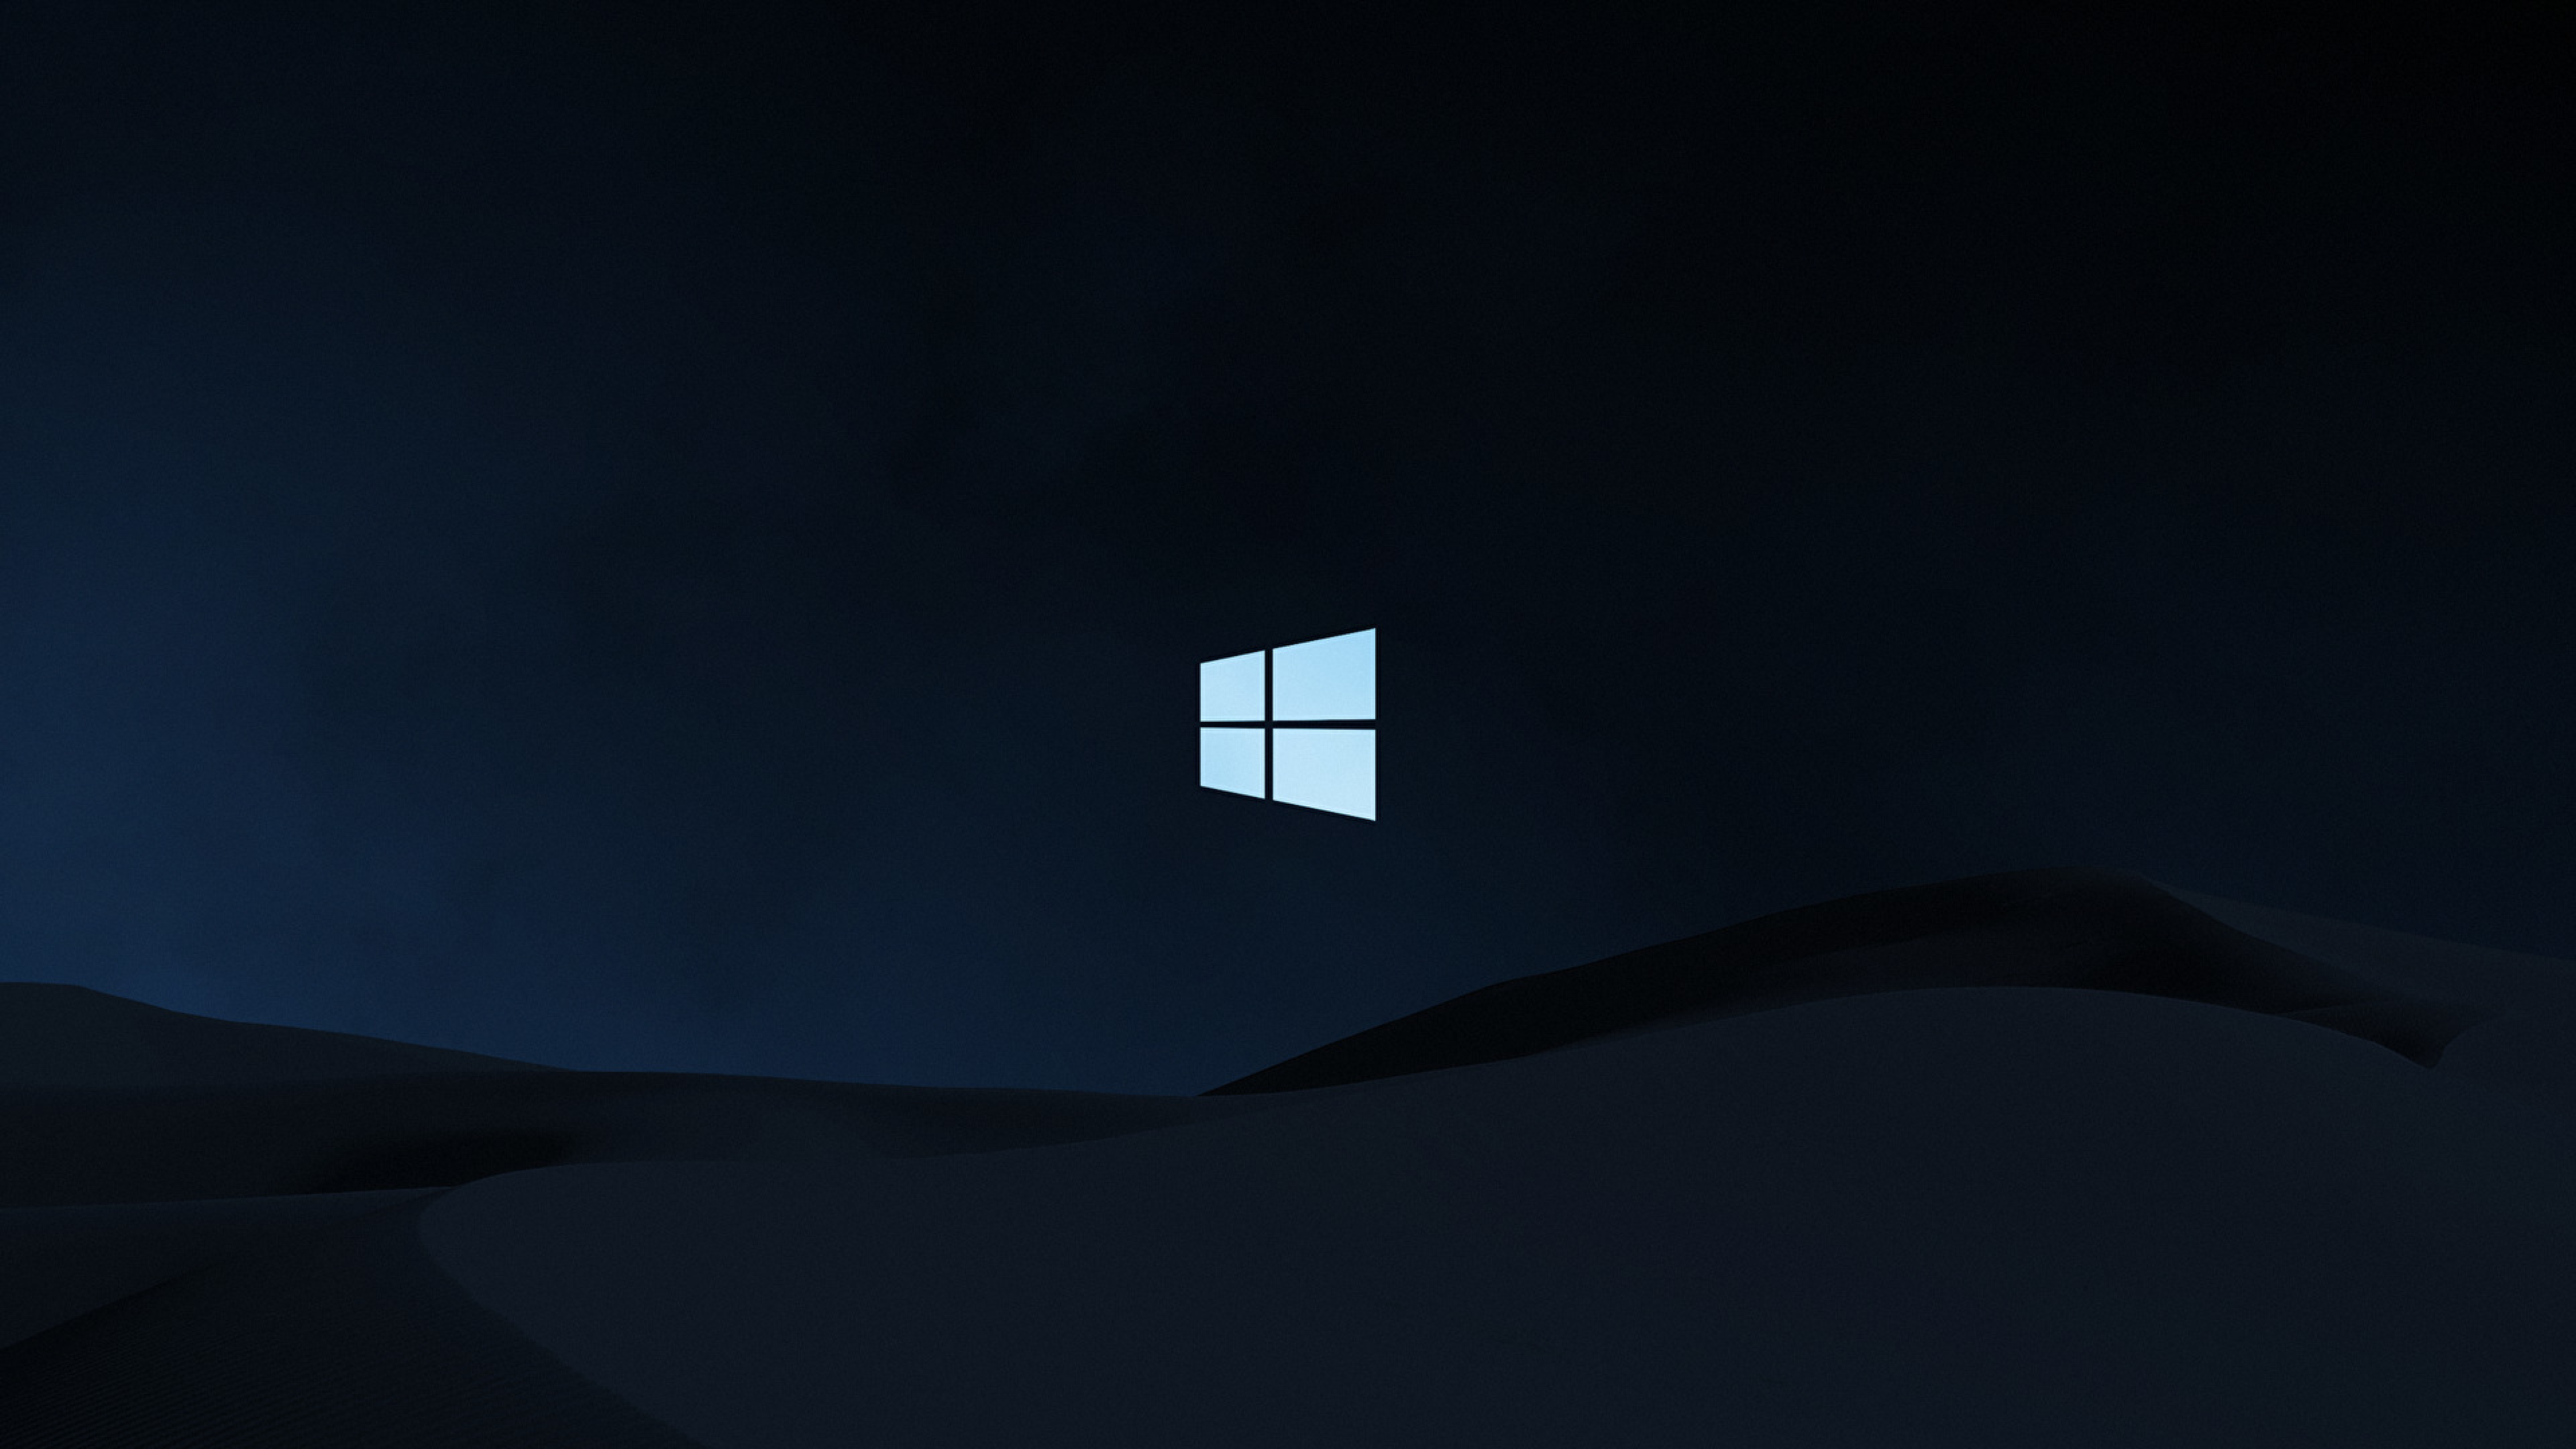 7680x4320 Windows 10 Clean Dark 8K Background, HD Brands 4K Wallpapers